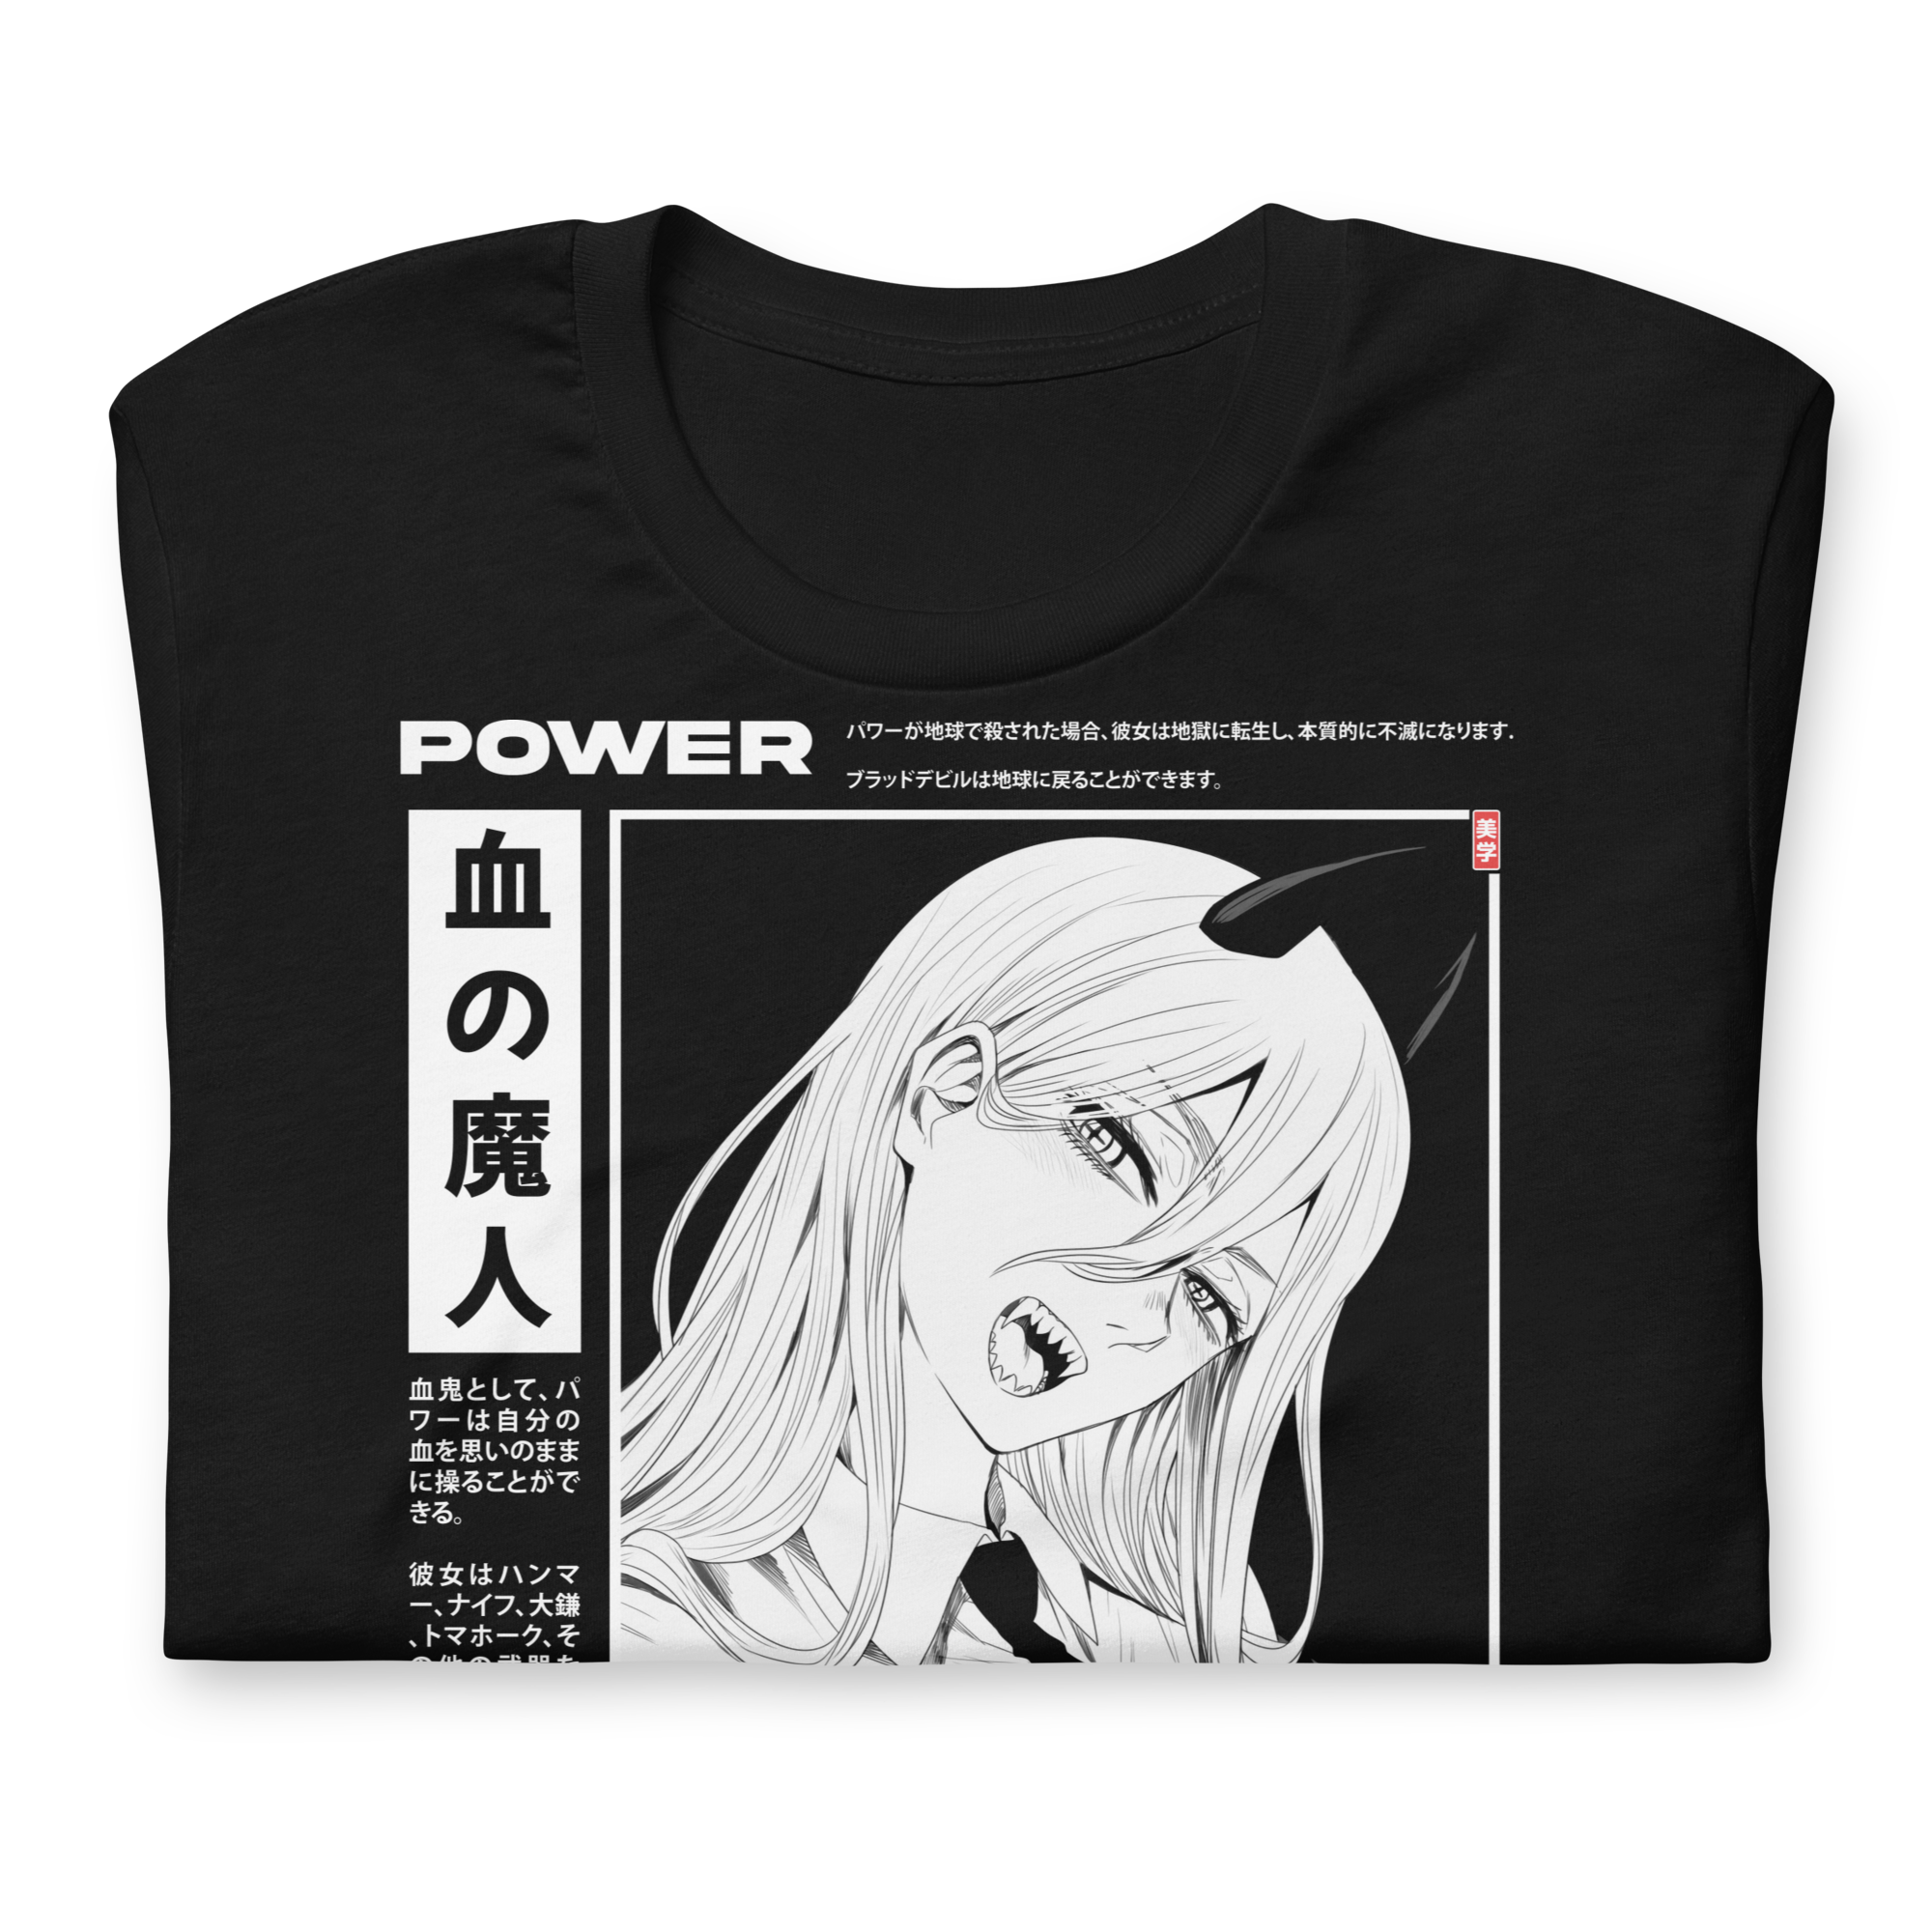 POWER (Blood Devil) - T-Shirt